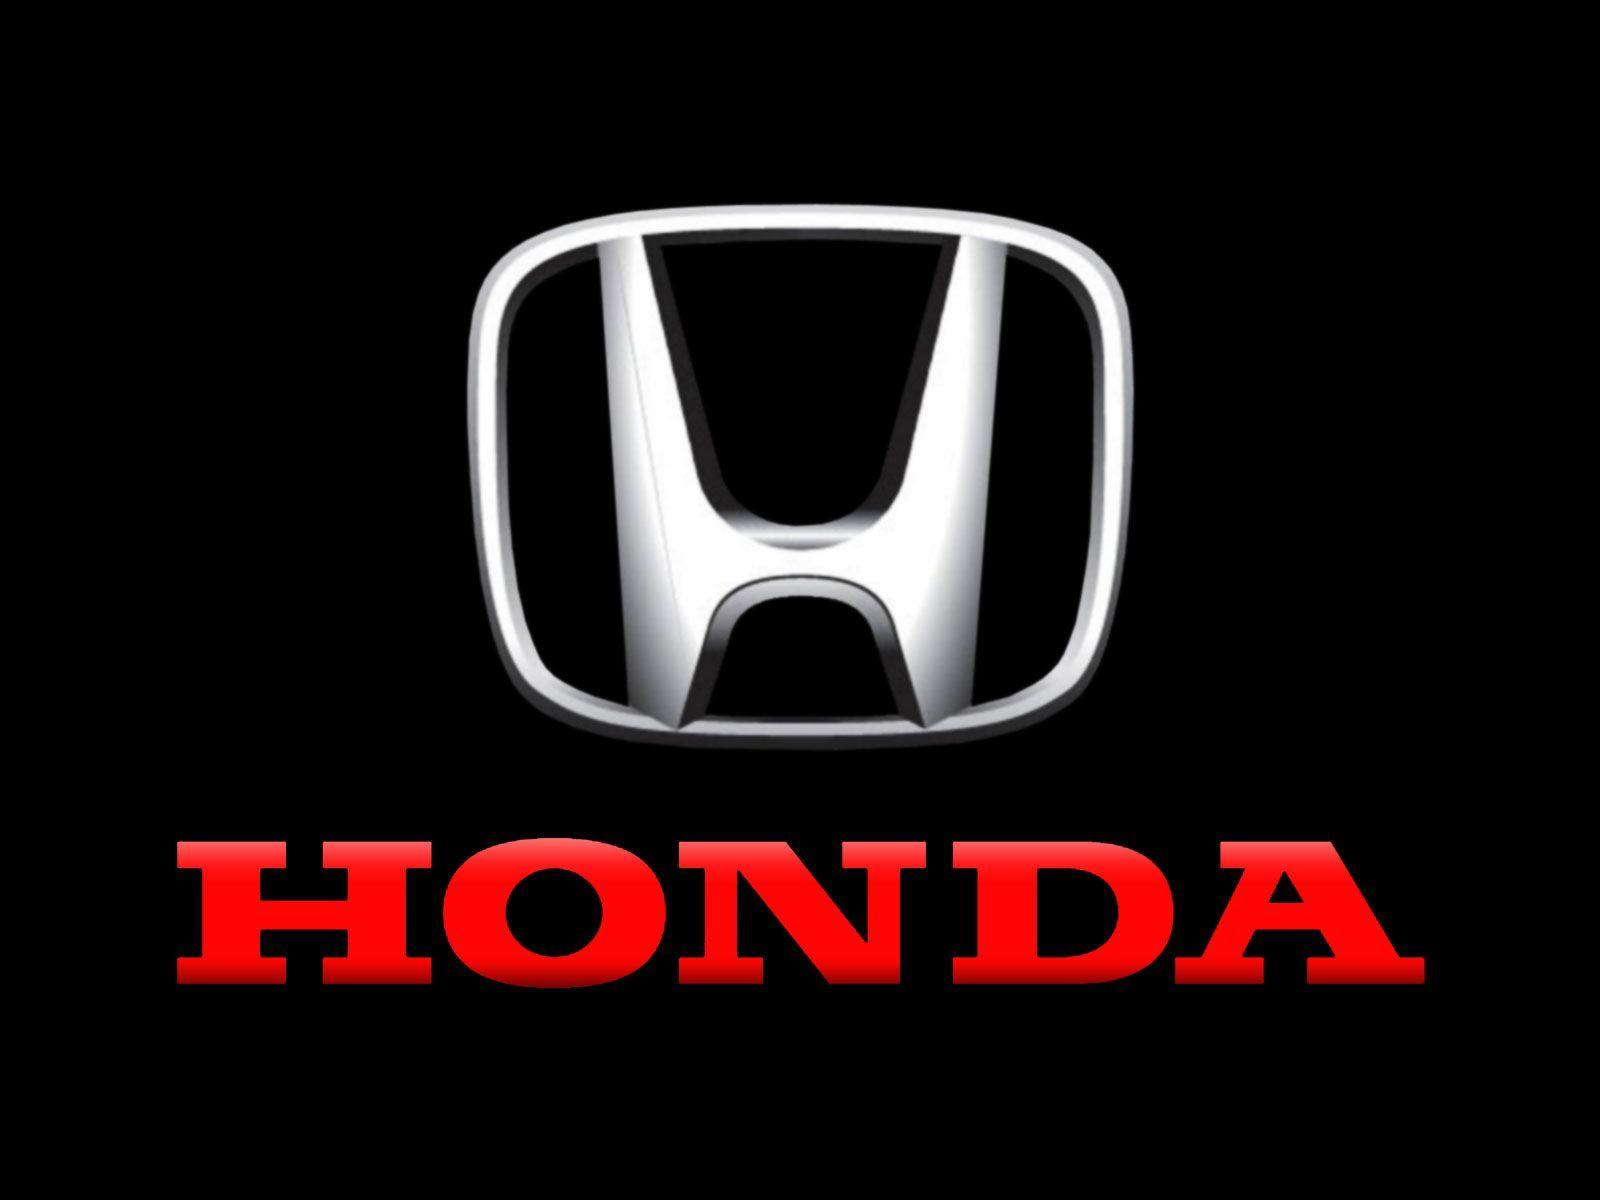 Honda Civic Logo - Honda Logo, Honda Car Symbol Meaning and History. Car Brand Names